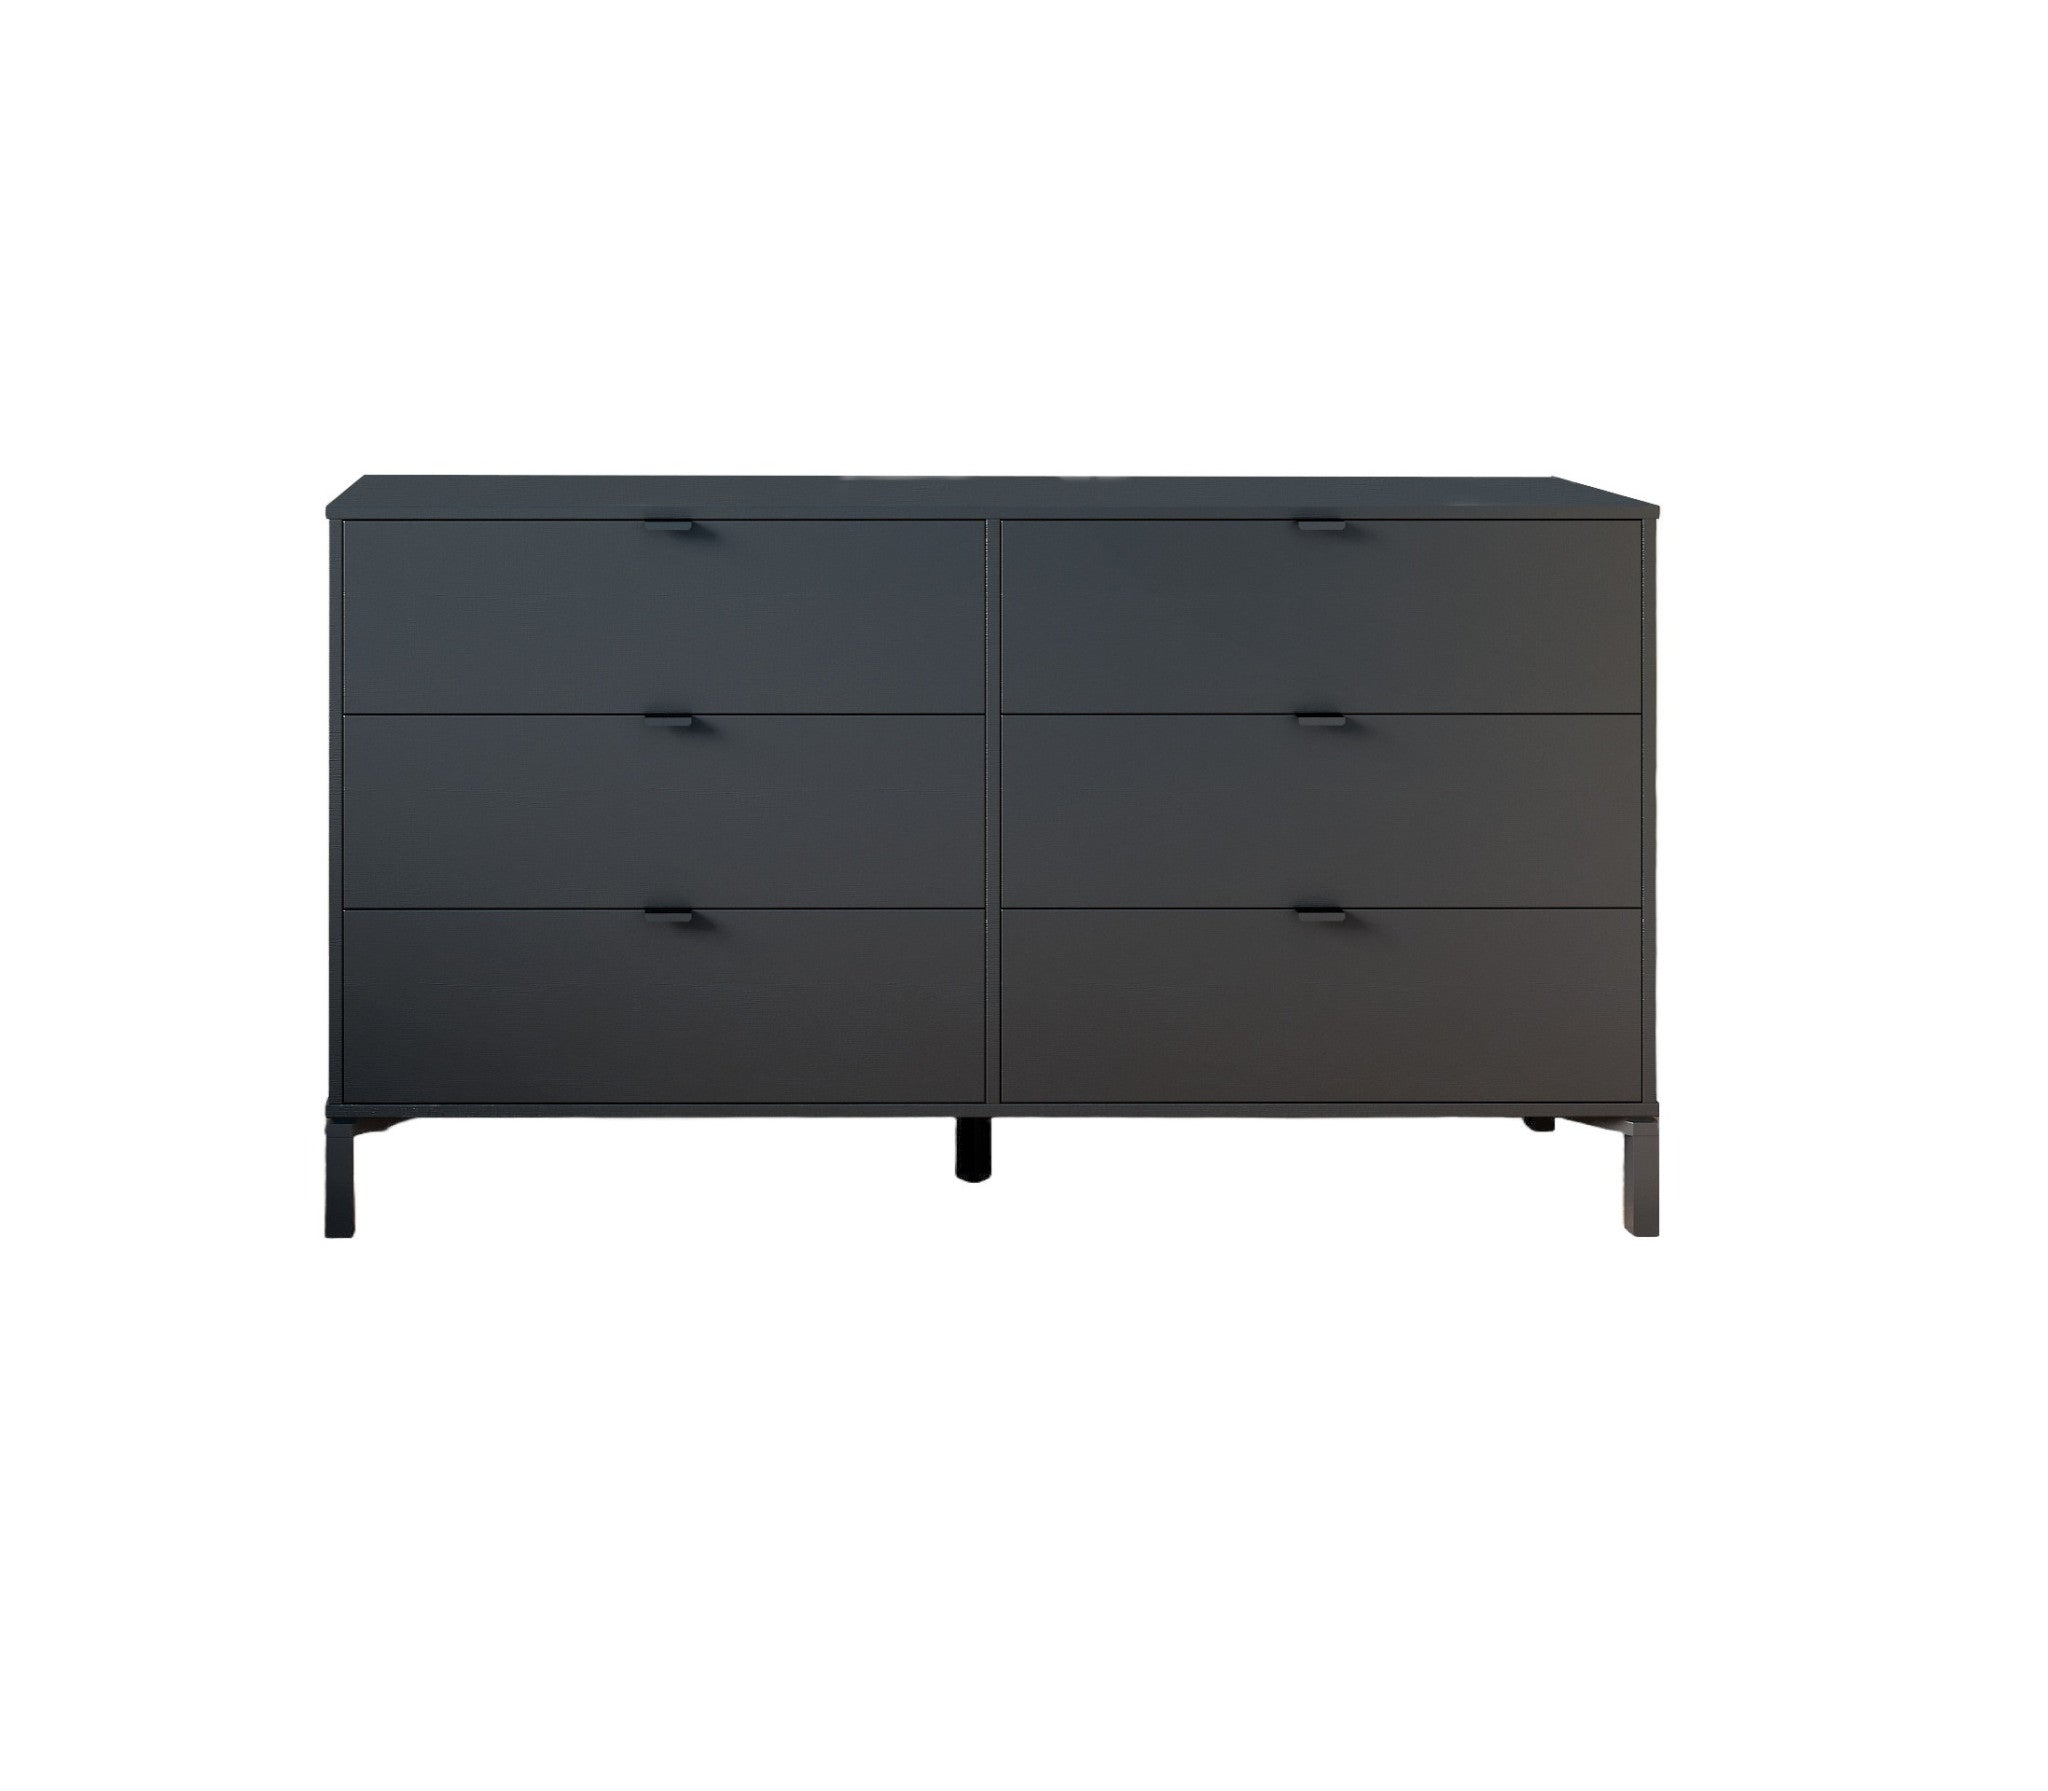 59" Black Charcoal Six Drawer Double Dresser